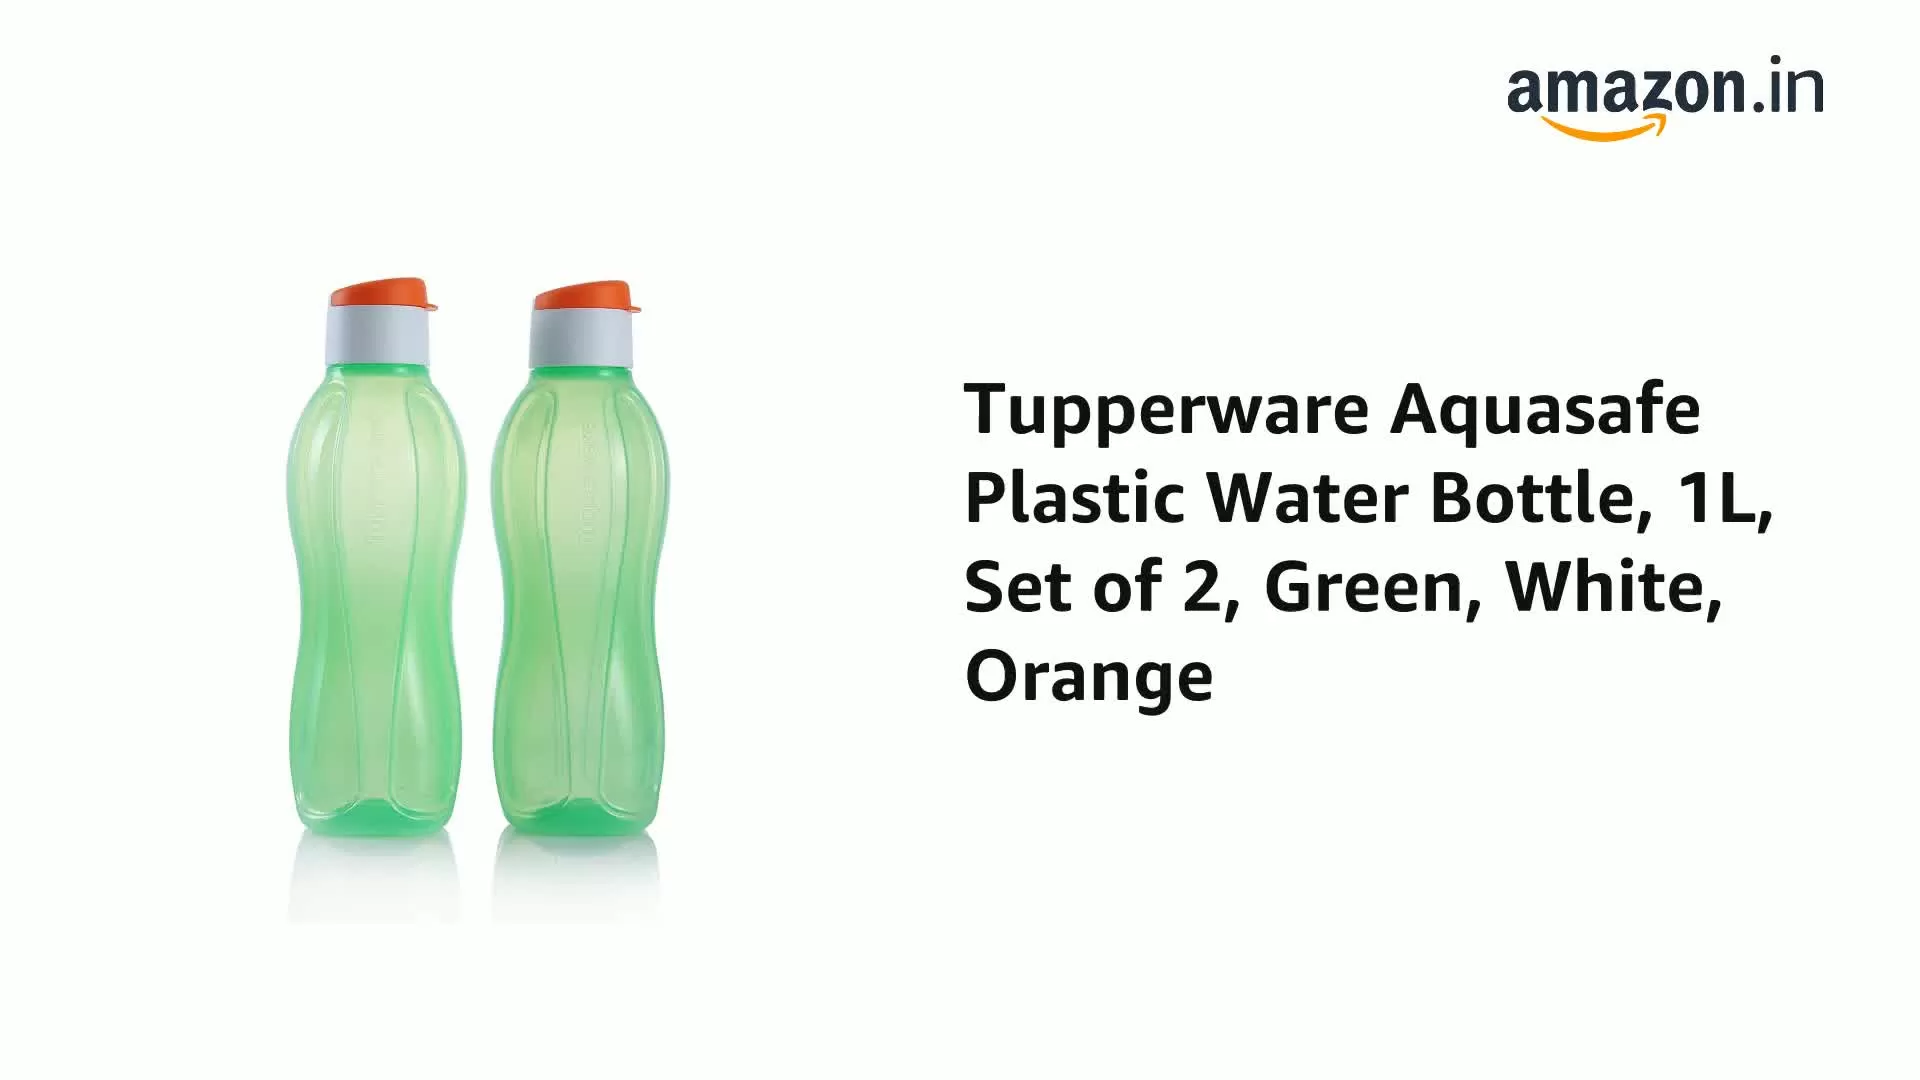 Aquasafe Plastic Water Bottle 1L Set of 2 Green White Orange, 2 image